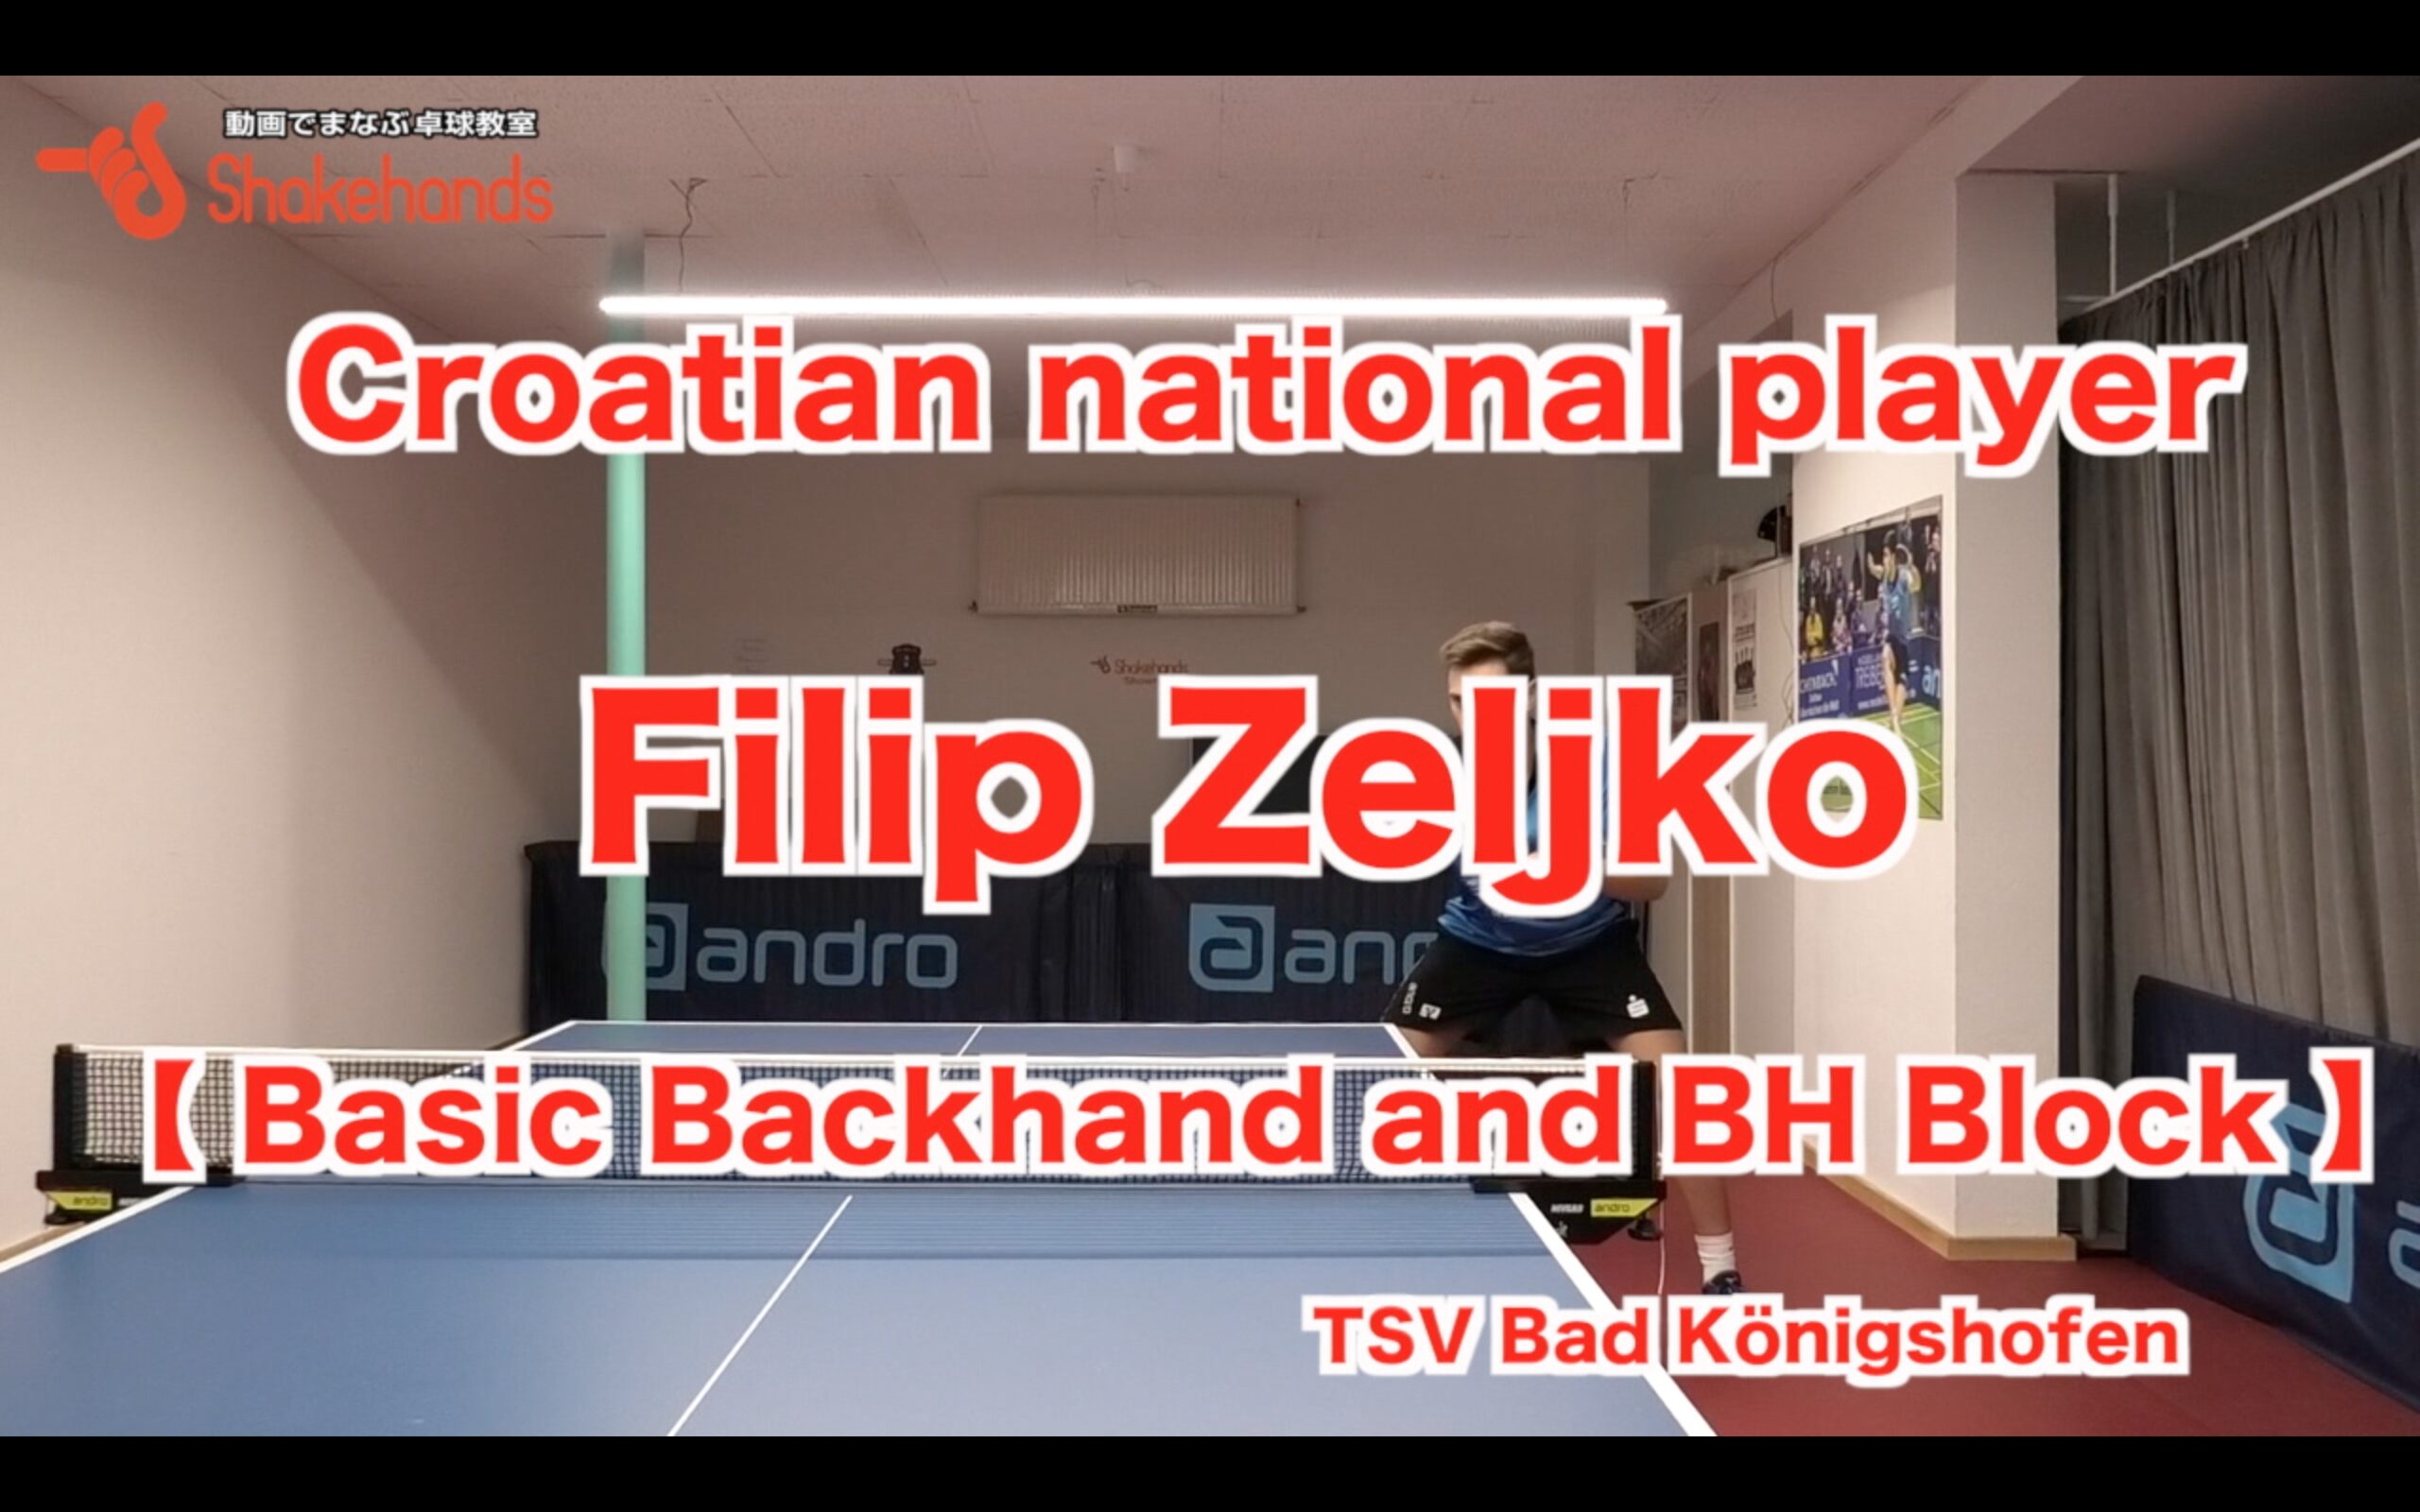 Basic backhand and BH Block